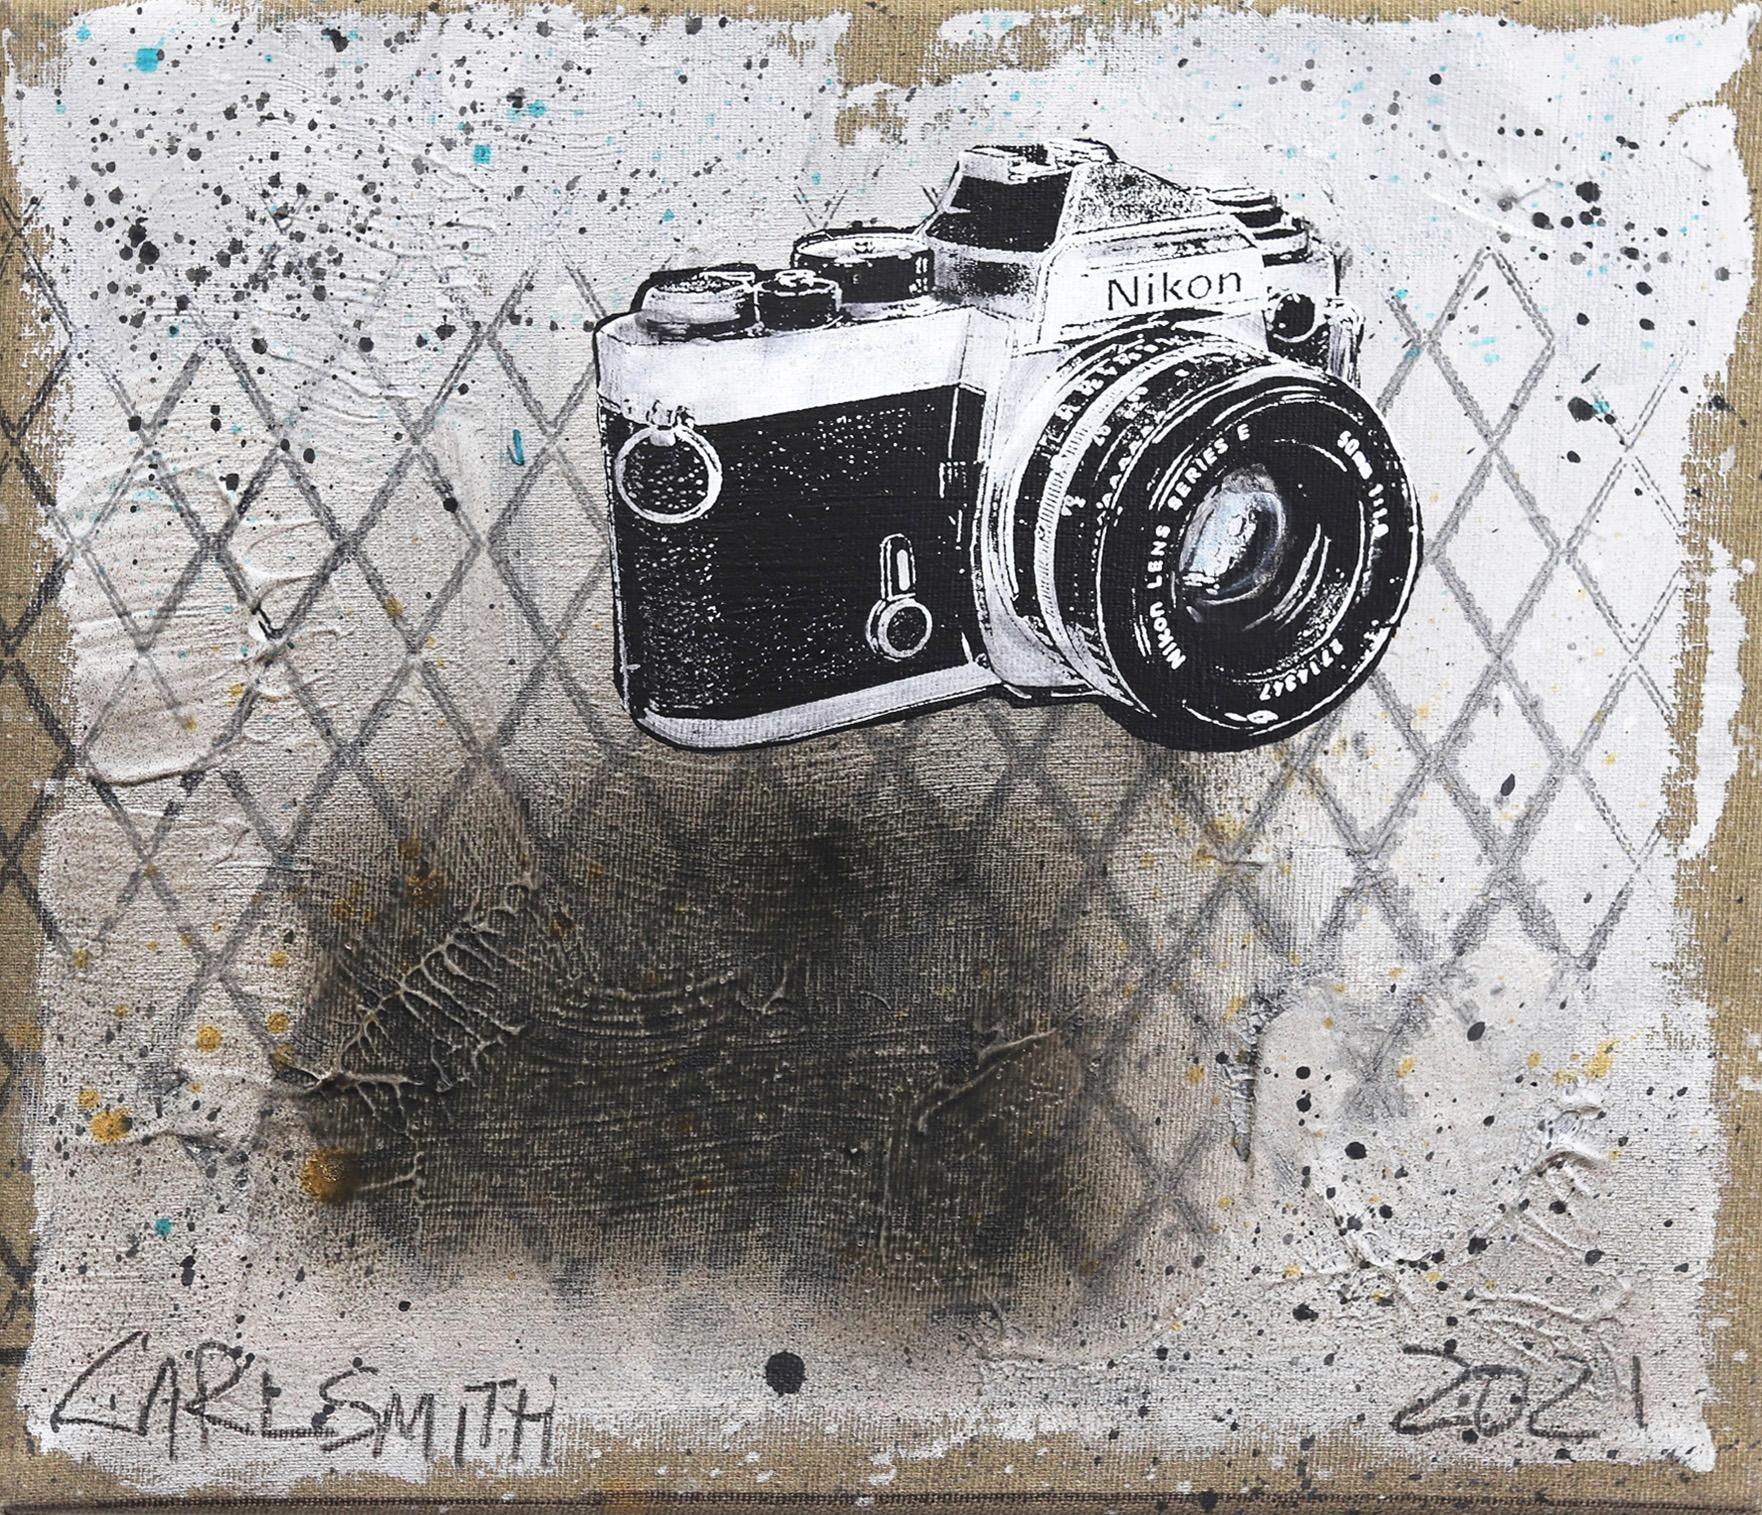 Nikon Away - Pop Art inspired by Camera Original by Carl Smith